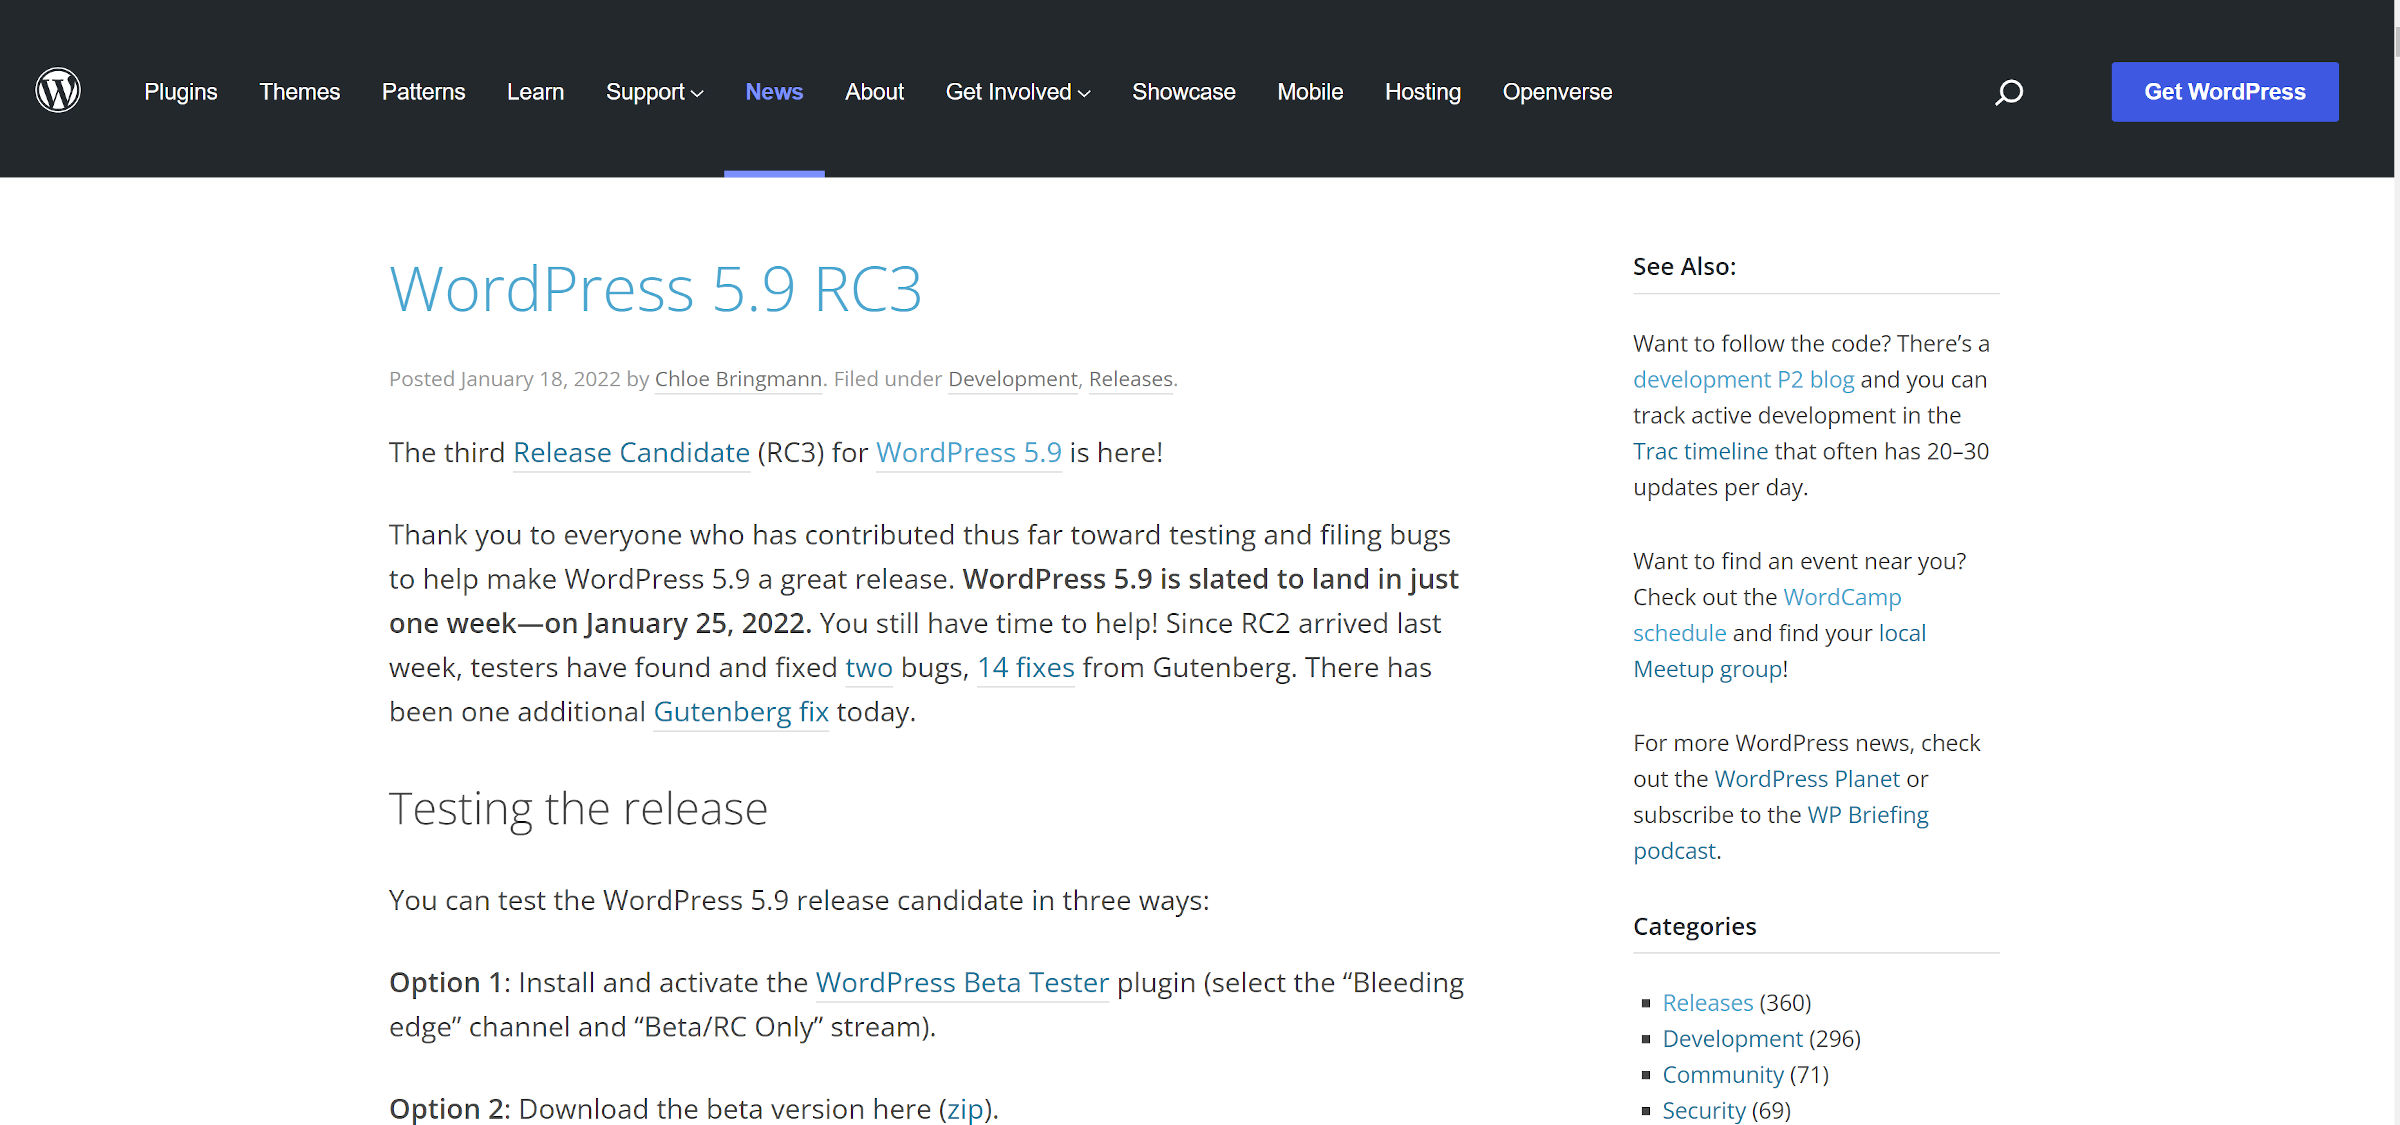 wporg-newspage WordPress.org Gets New Global Header and Footer Design design tips 